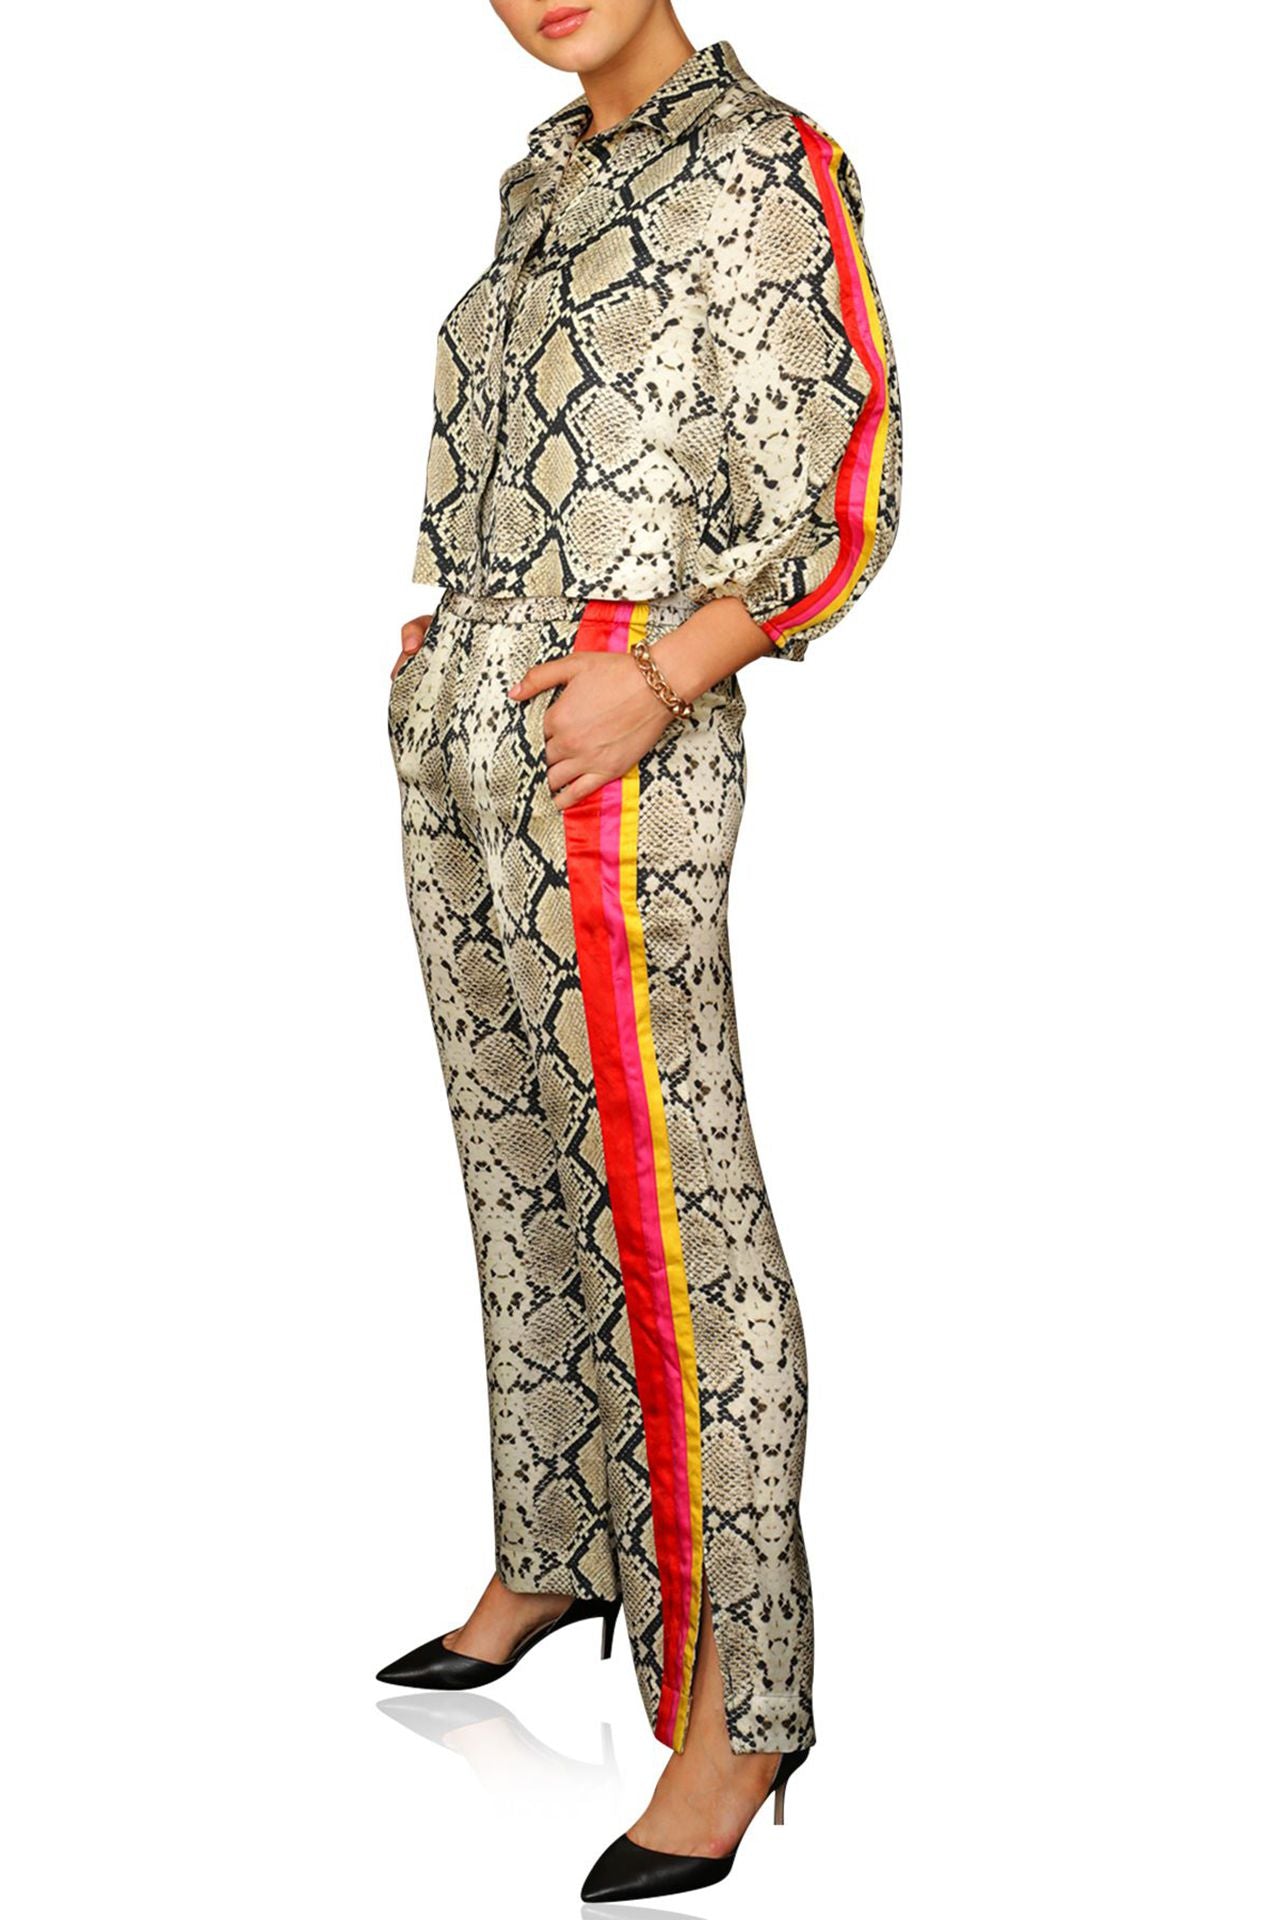 Kyle Richards Snake Print Pant Suit Matching Set